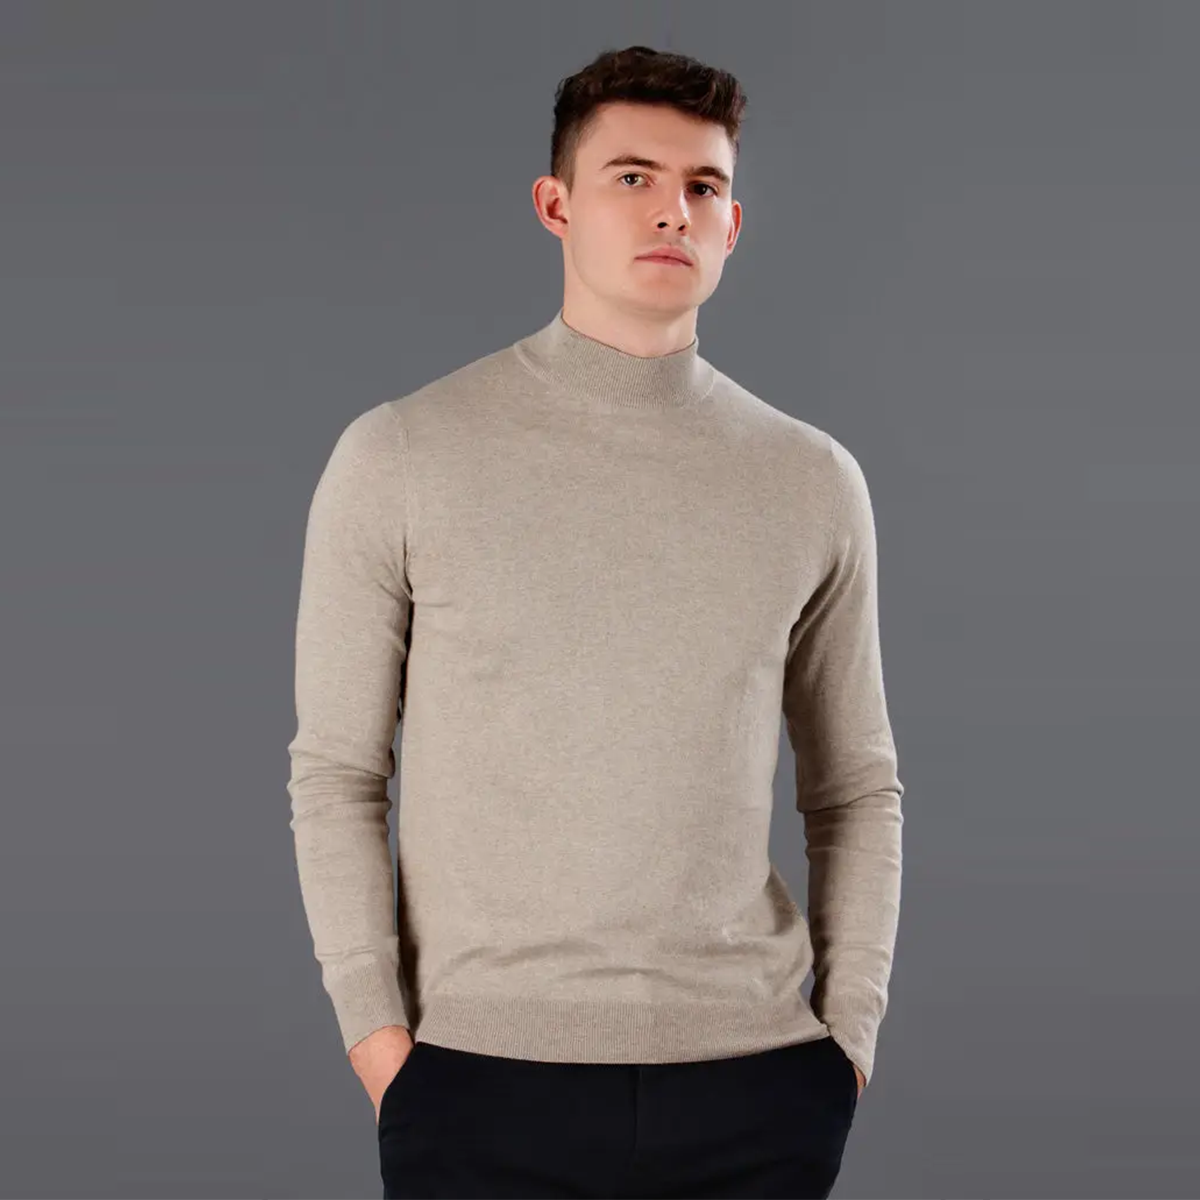 Tasker & Shaw | Luxury Menswear | High Neck Long Sleeve Cotton Knitted Sweater